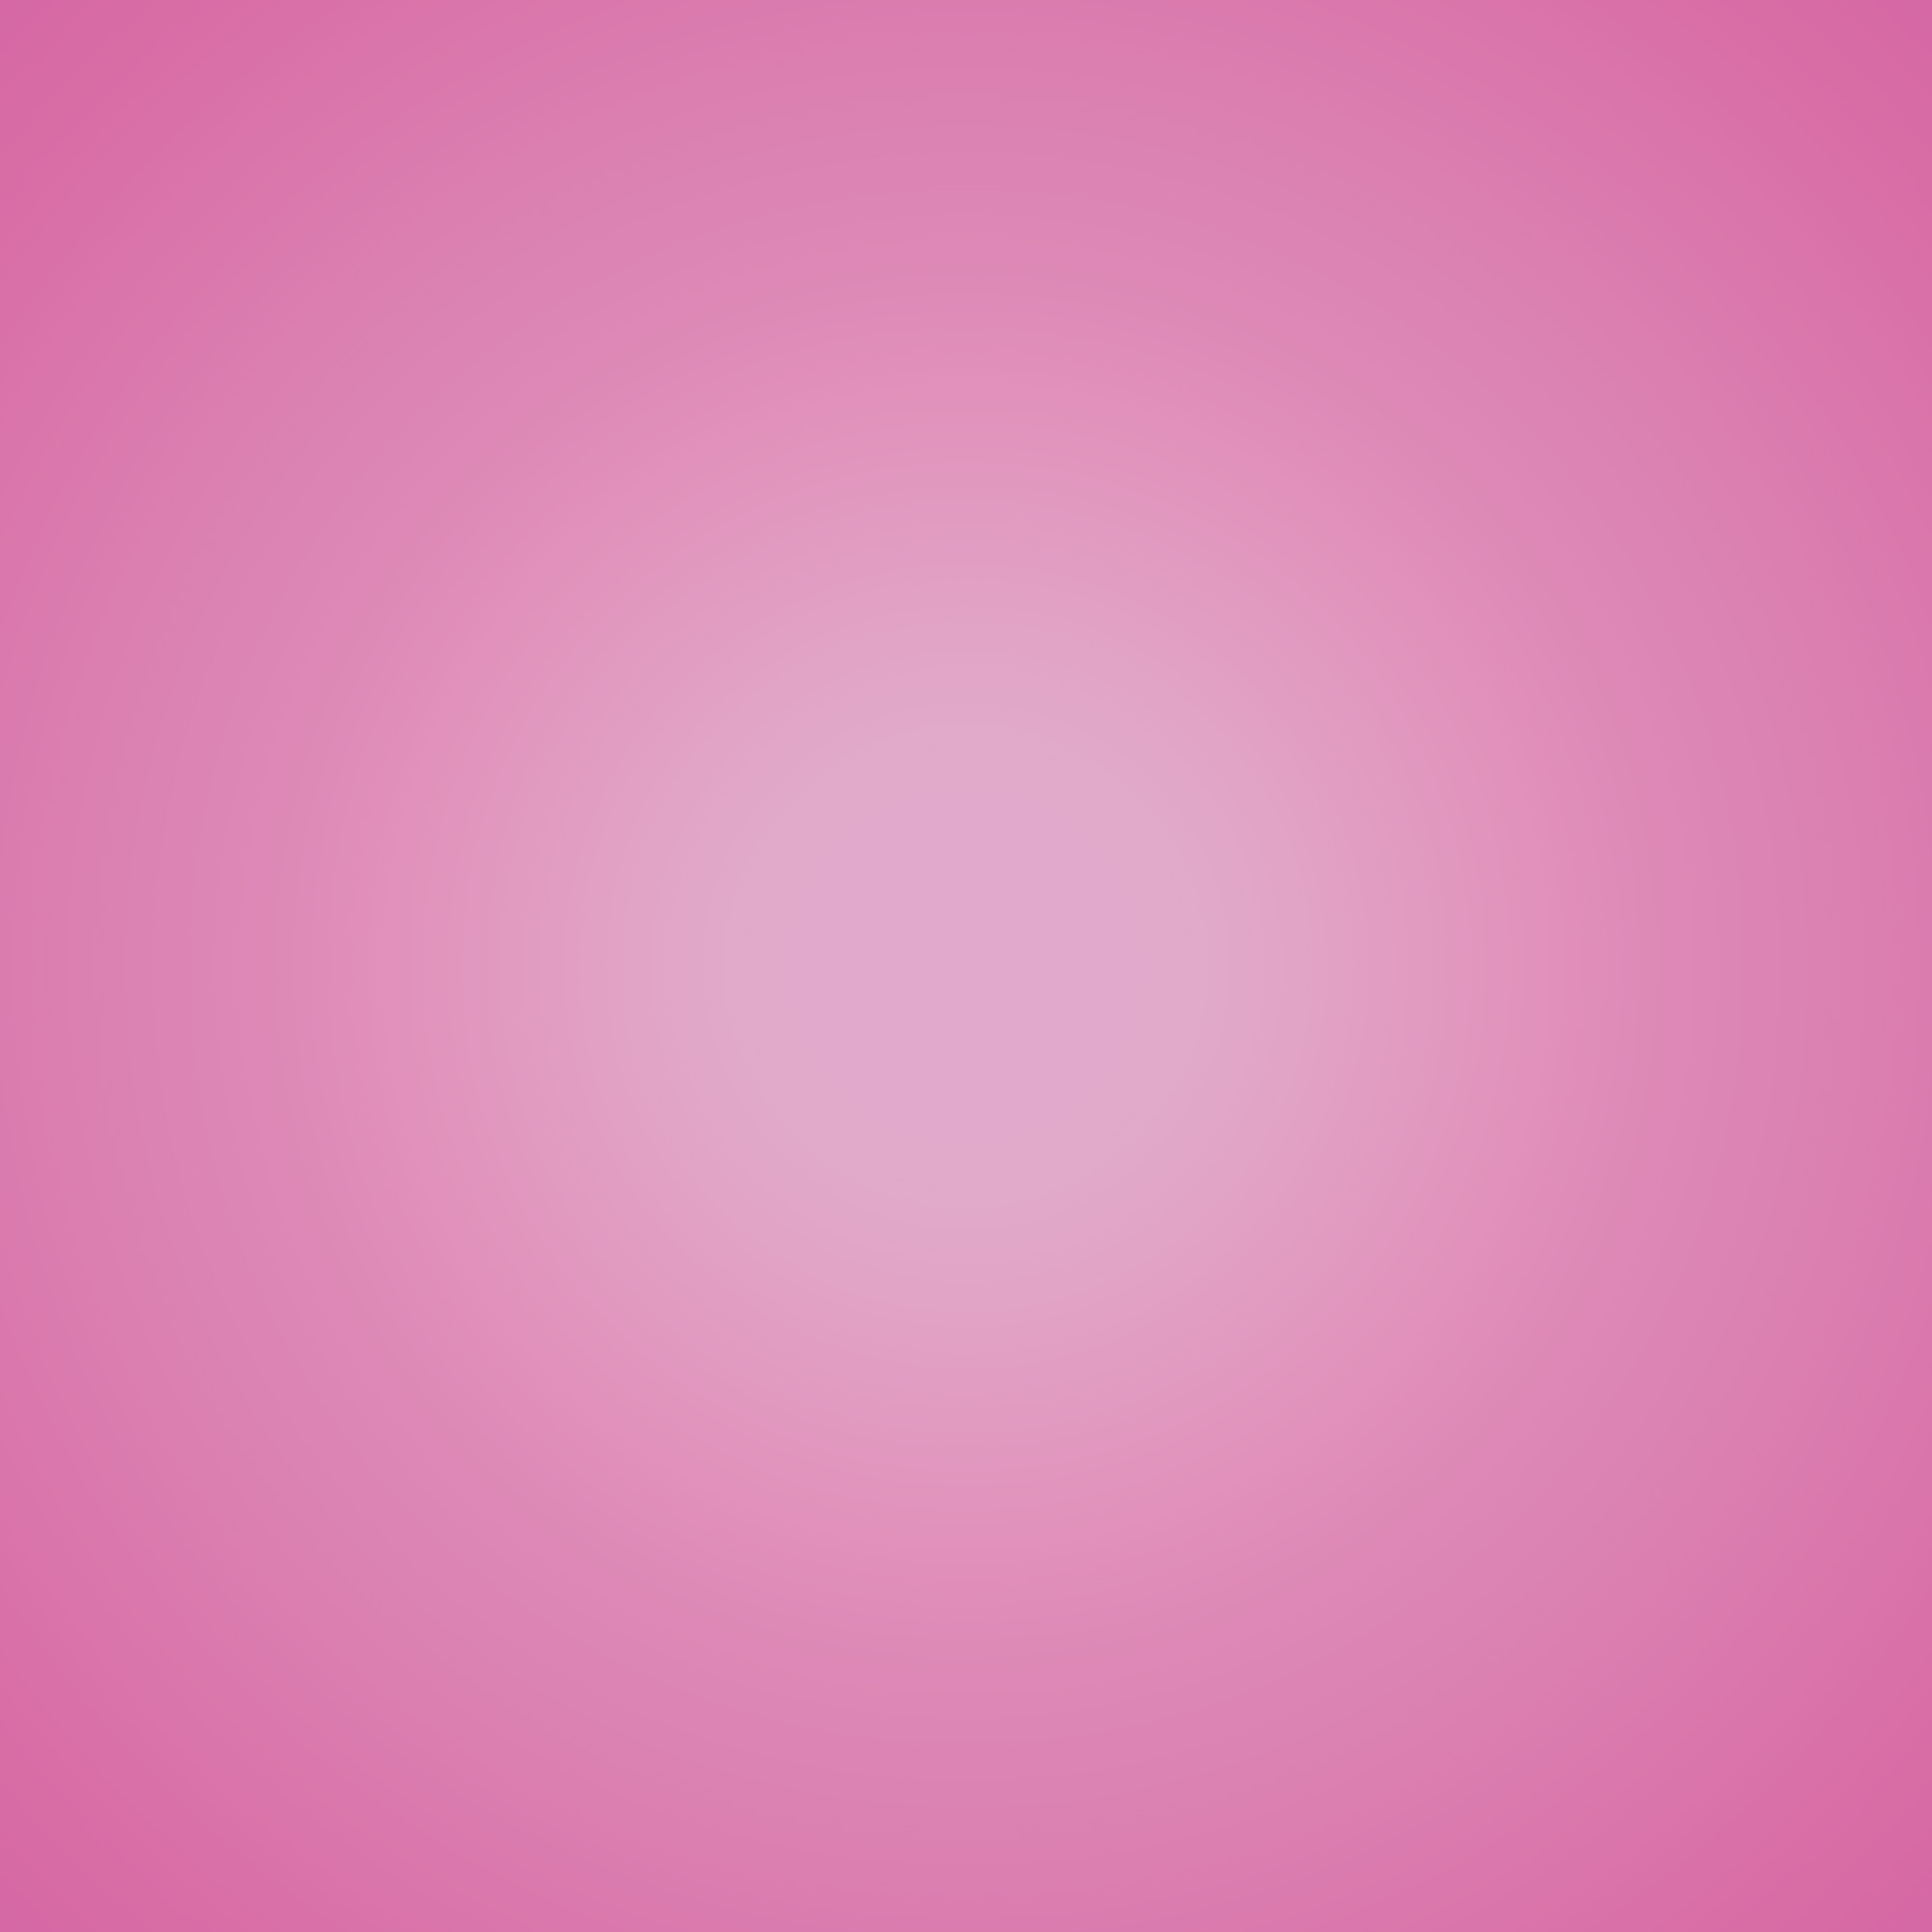 plain color pink backgrounds